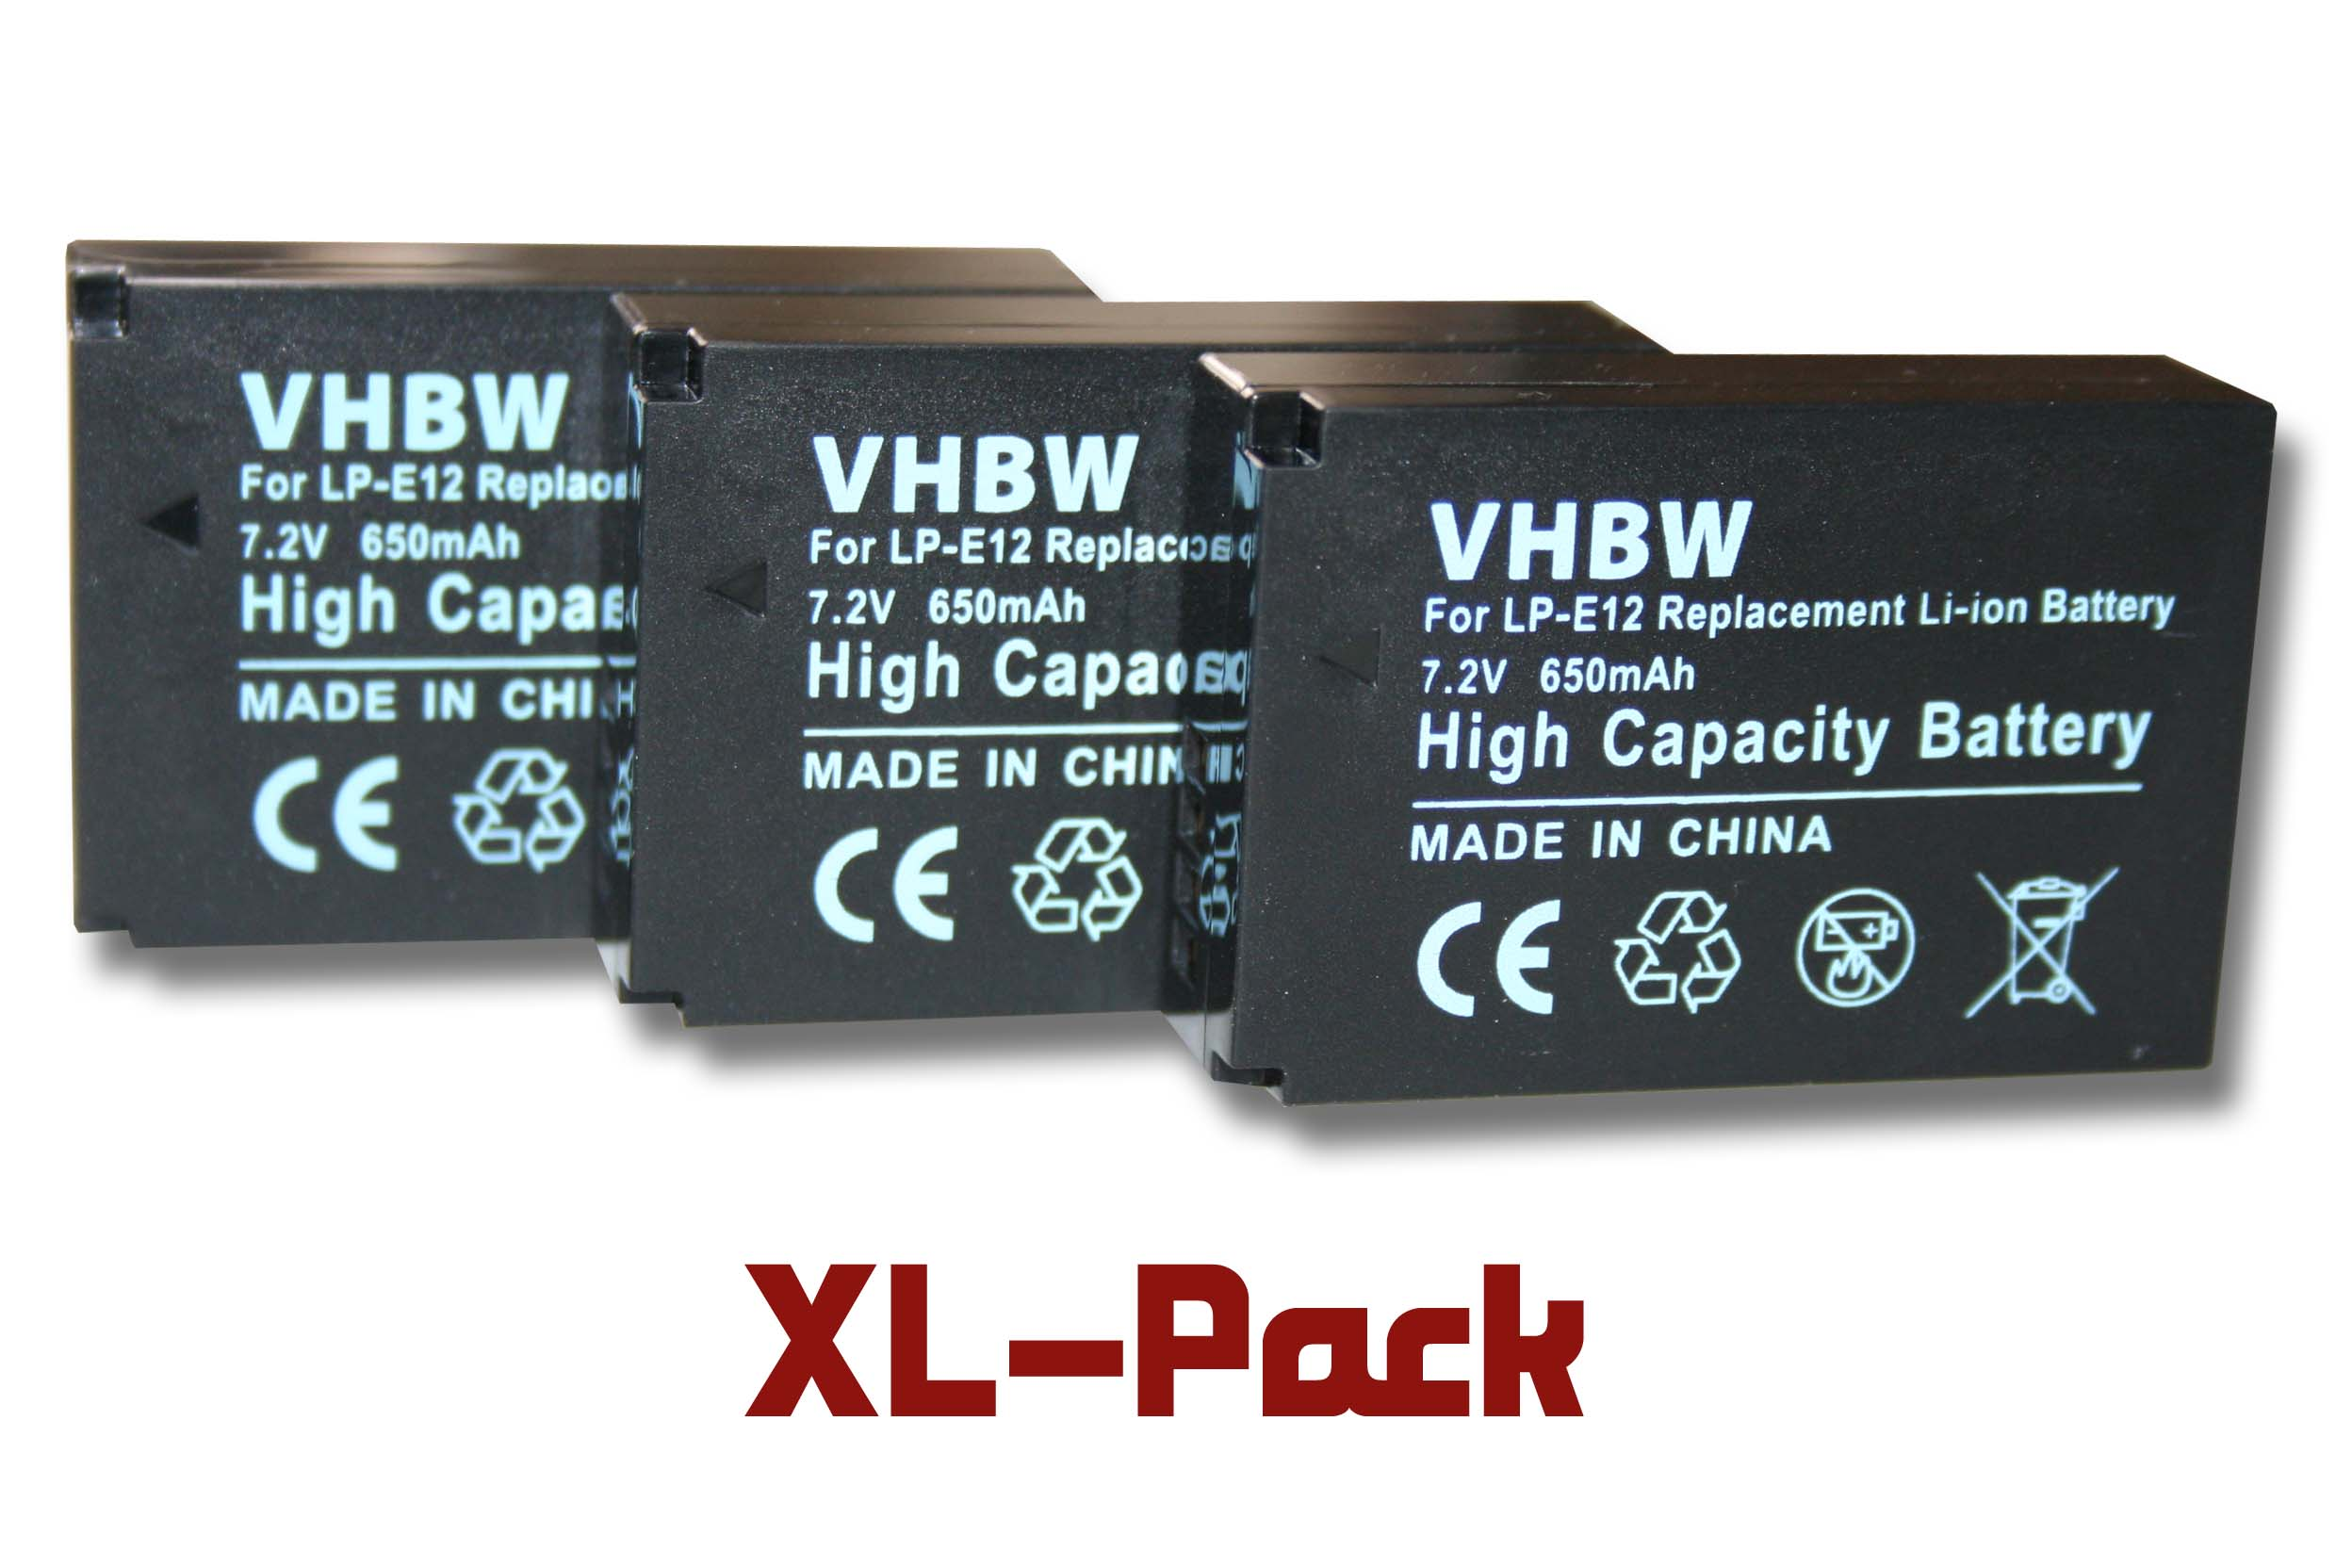 für Volt, VHBW Canon Akku, LP-E12 650 7.2 Ersatz mAh für Li-Ion